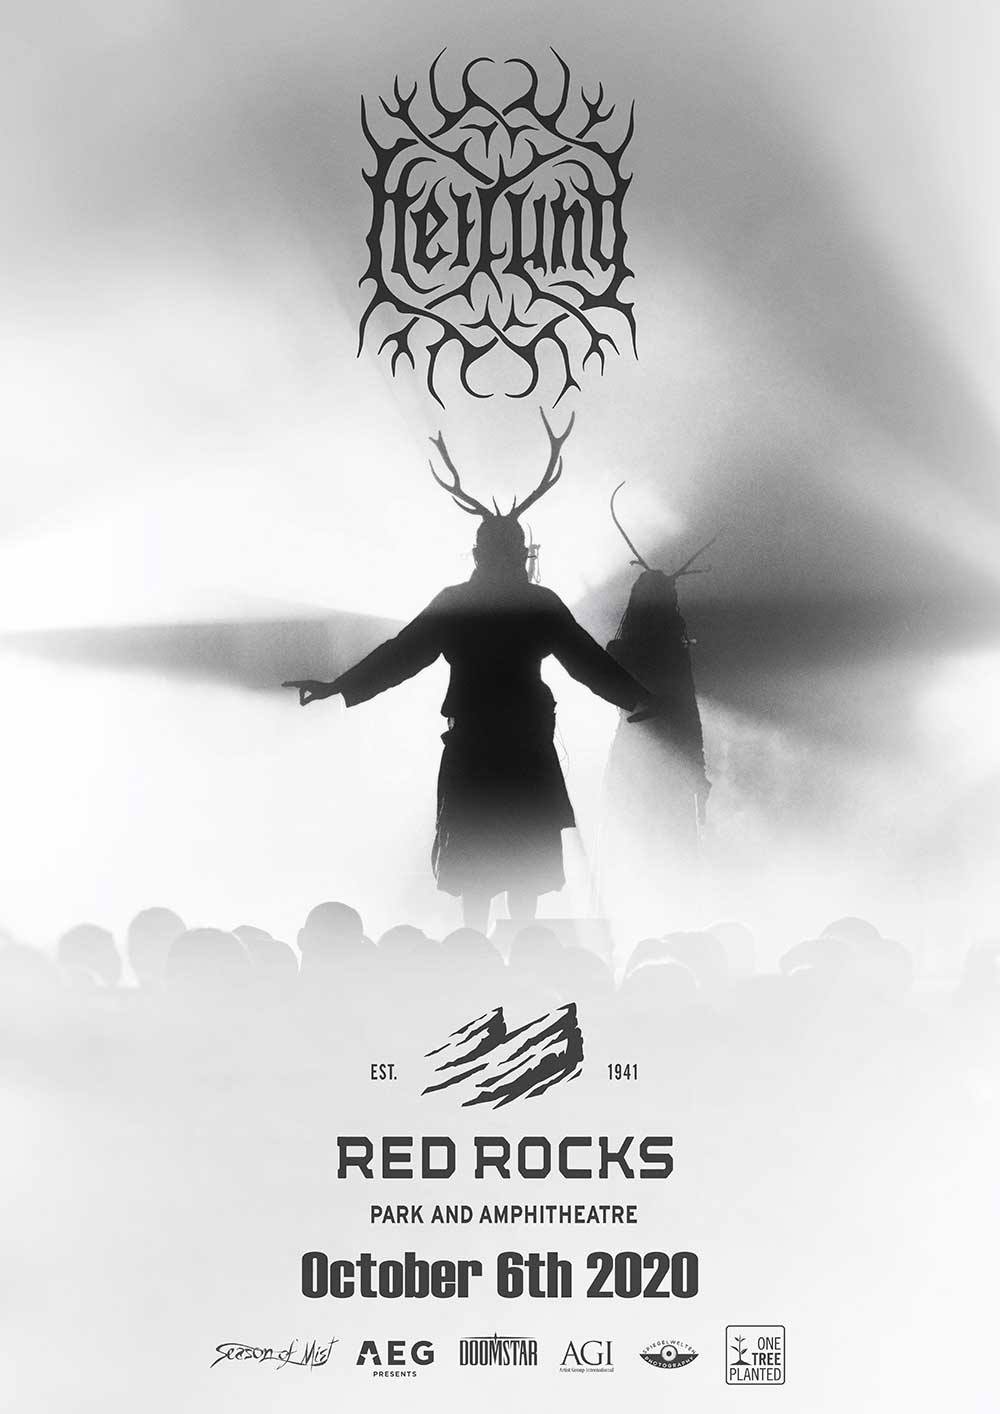 Heilung announce headlining show at Red Rocks Amphitheater NextMosh